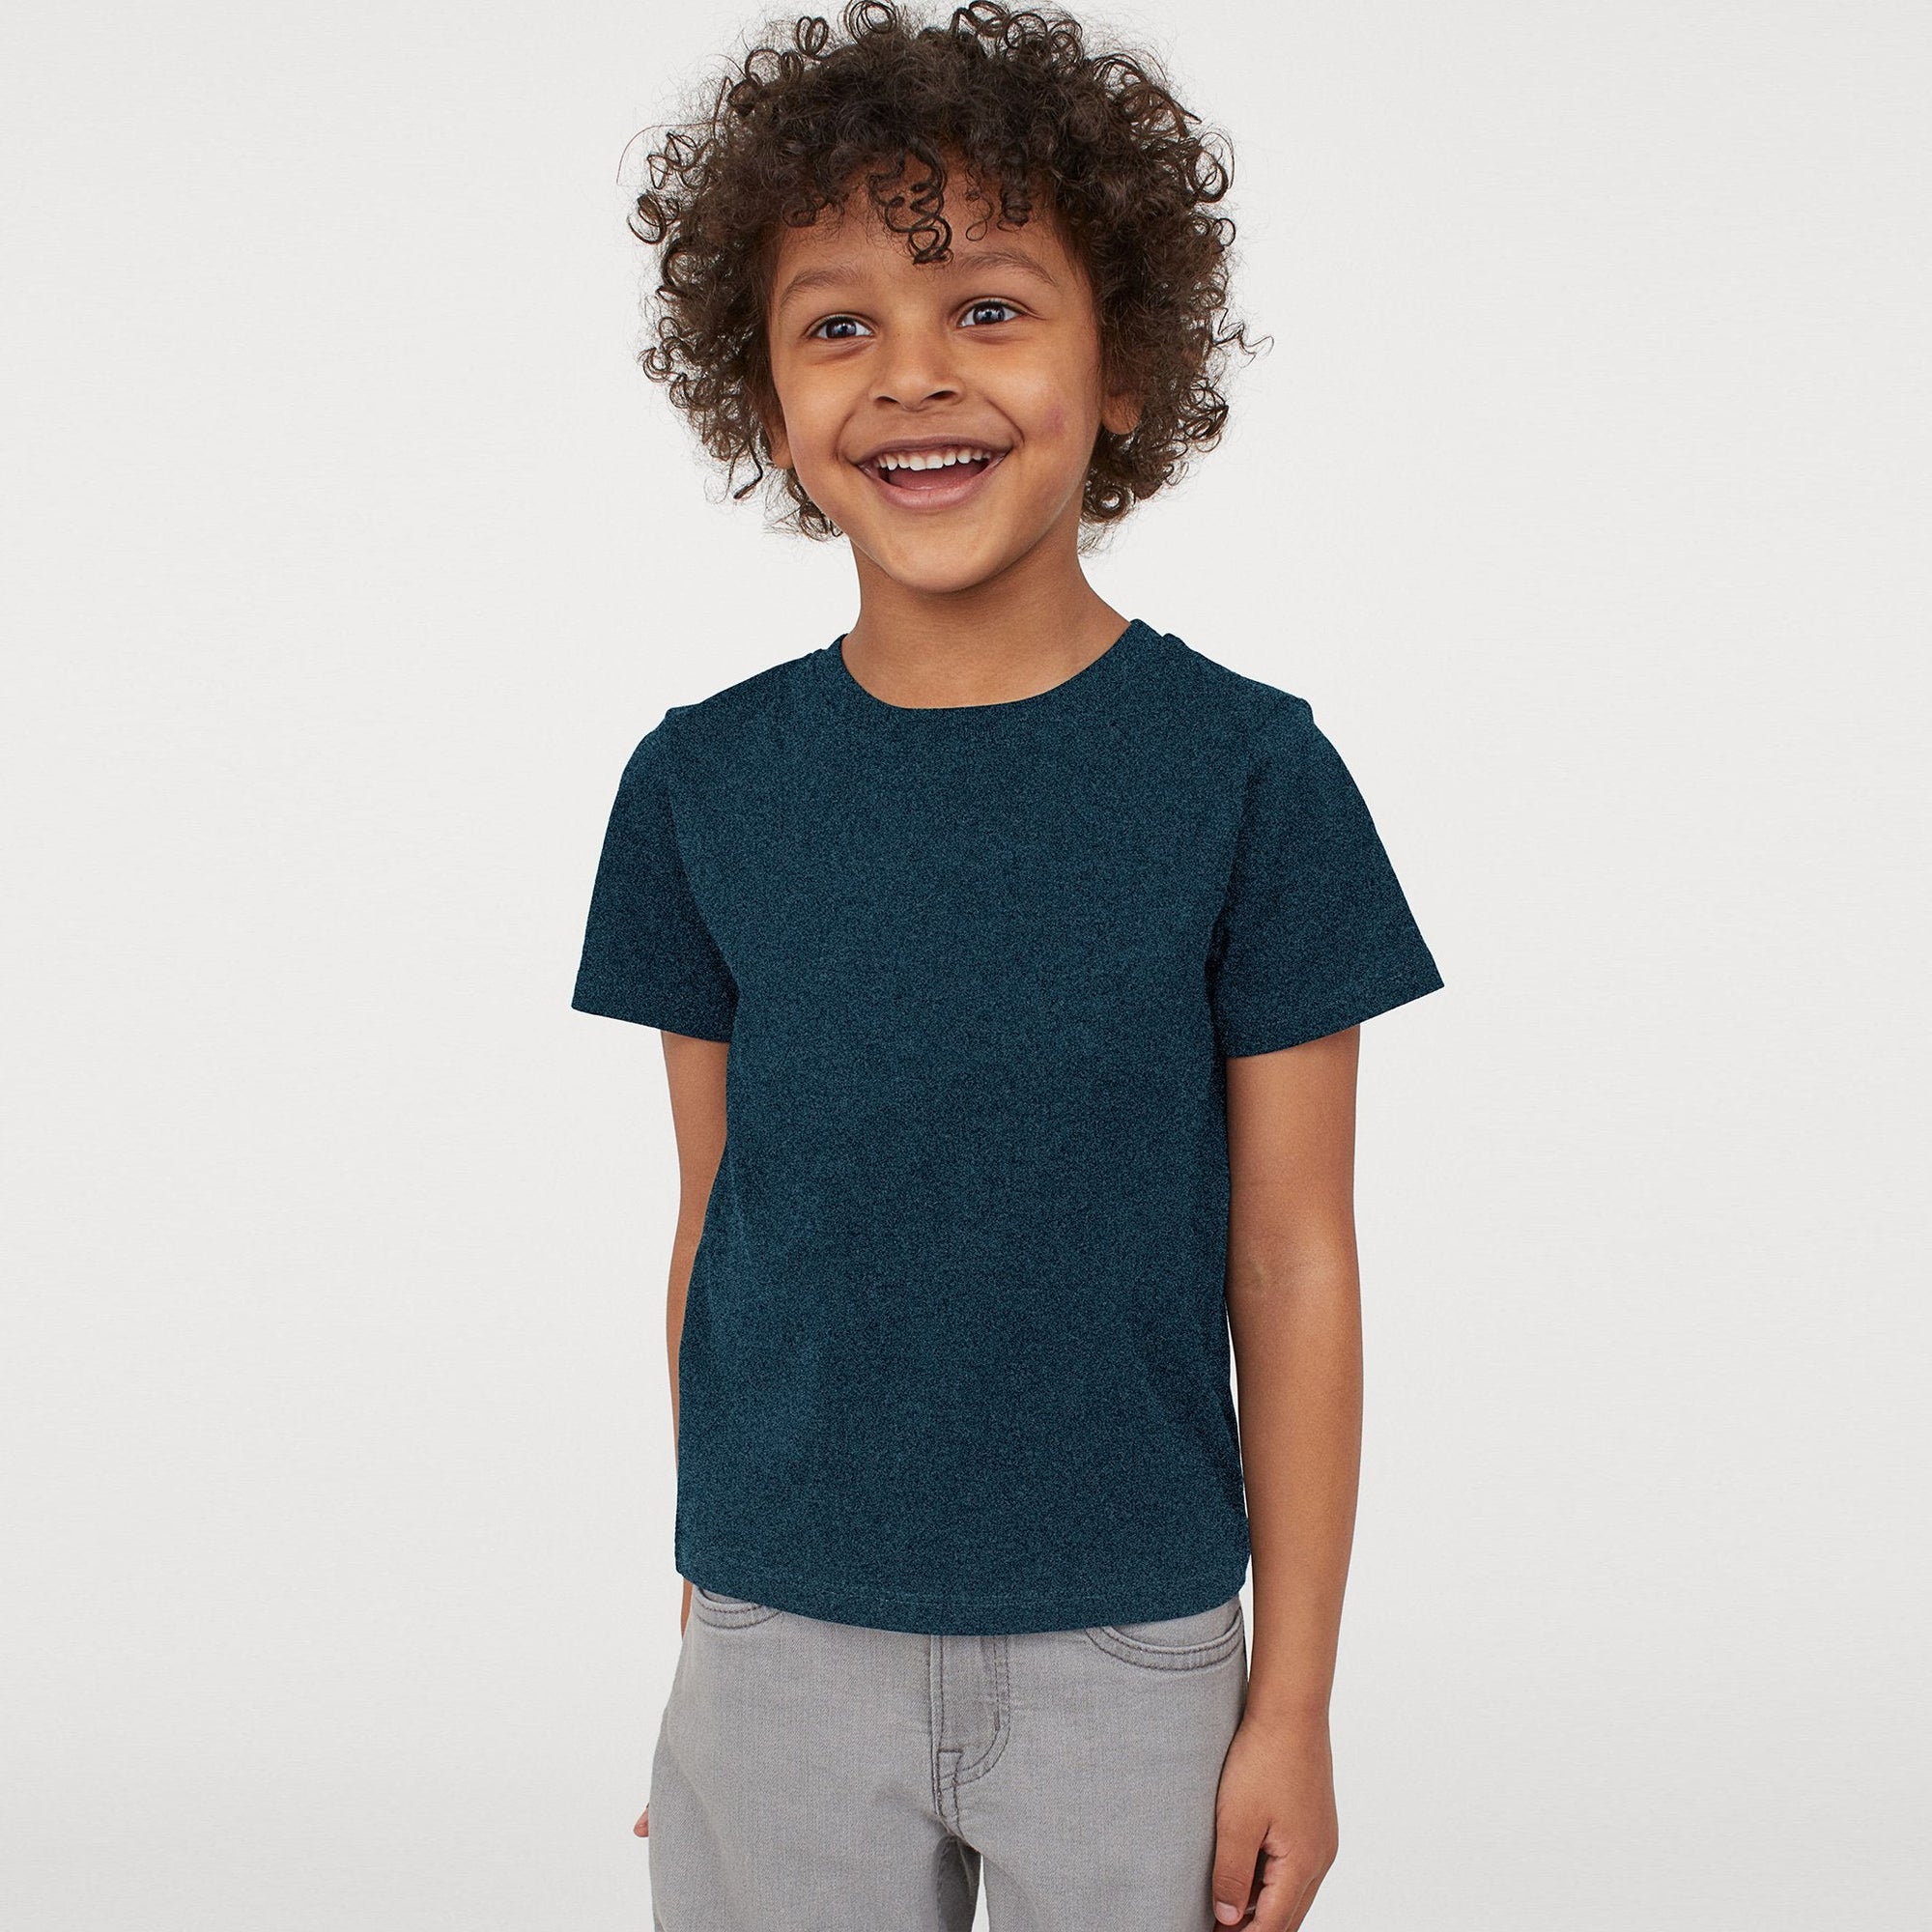 Basic Crew Neck Single Jersey Tee Shirt For Kids-Cyan Blue Melange-NA11577